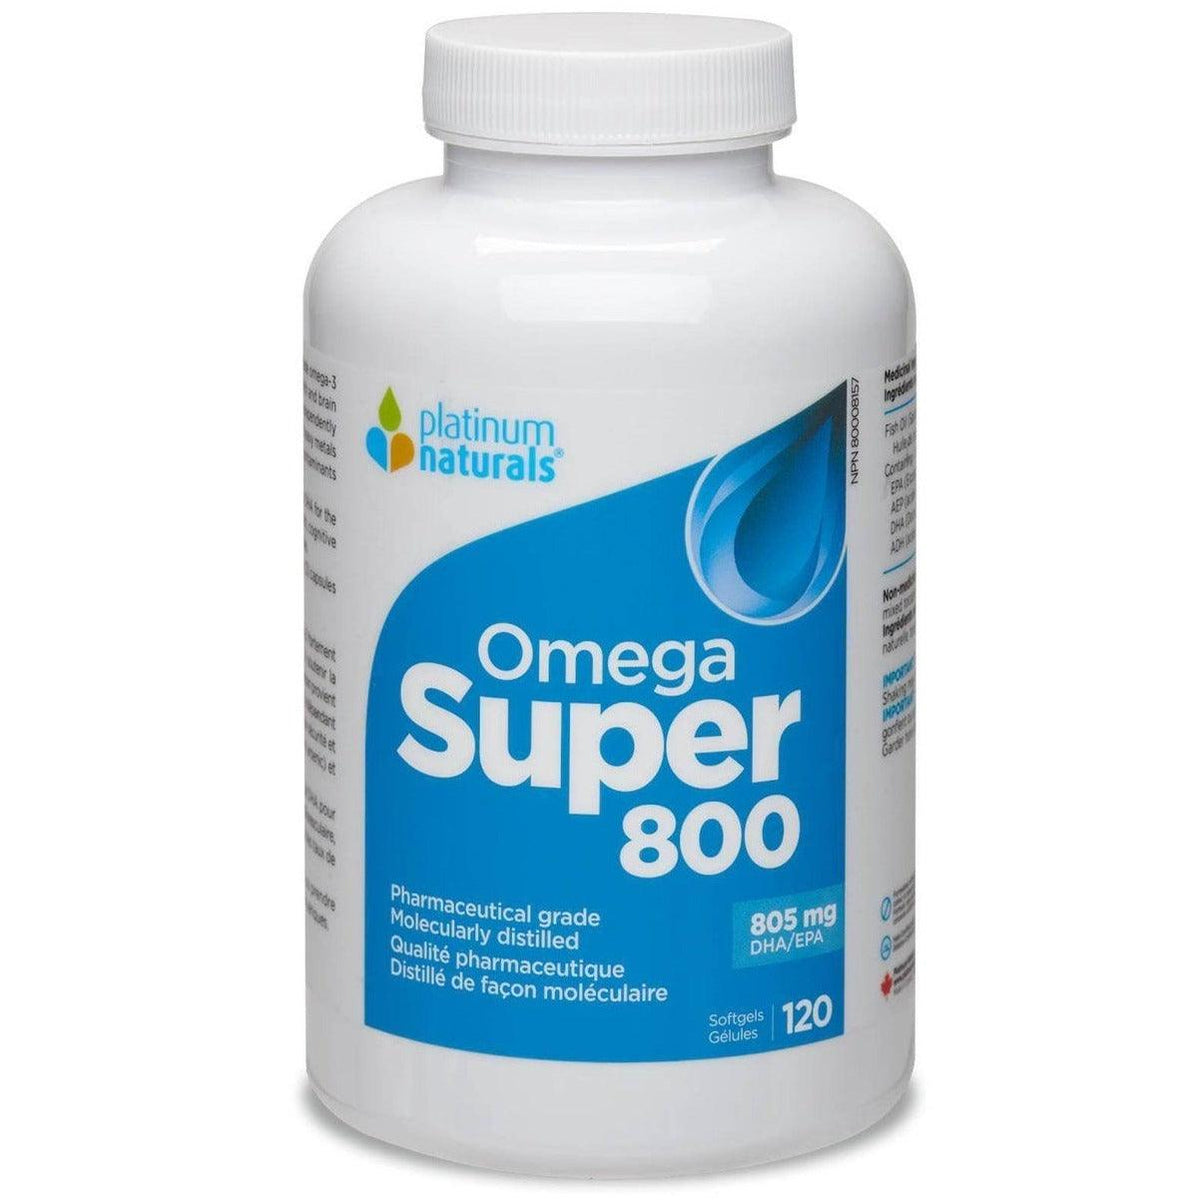 Platinum Naturals Omega Super 800 120 Softgels Supplements - EFAs at Village Vitamin Store